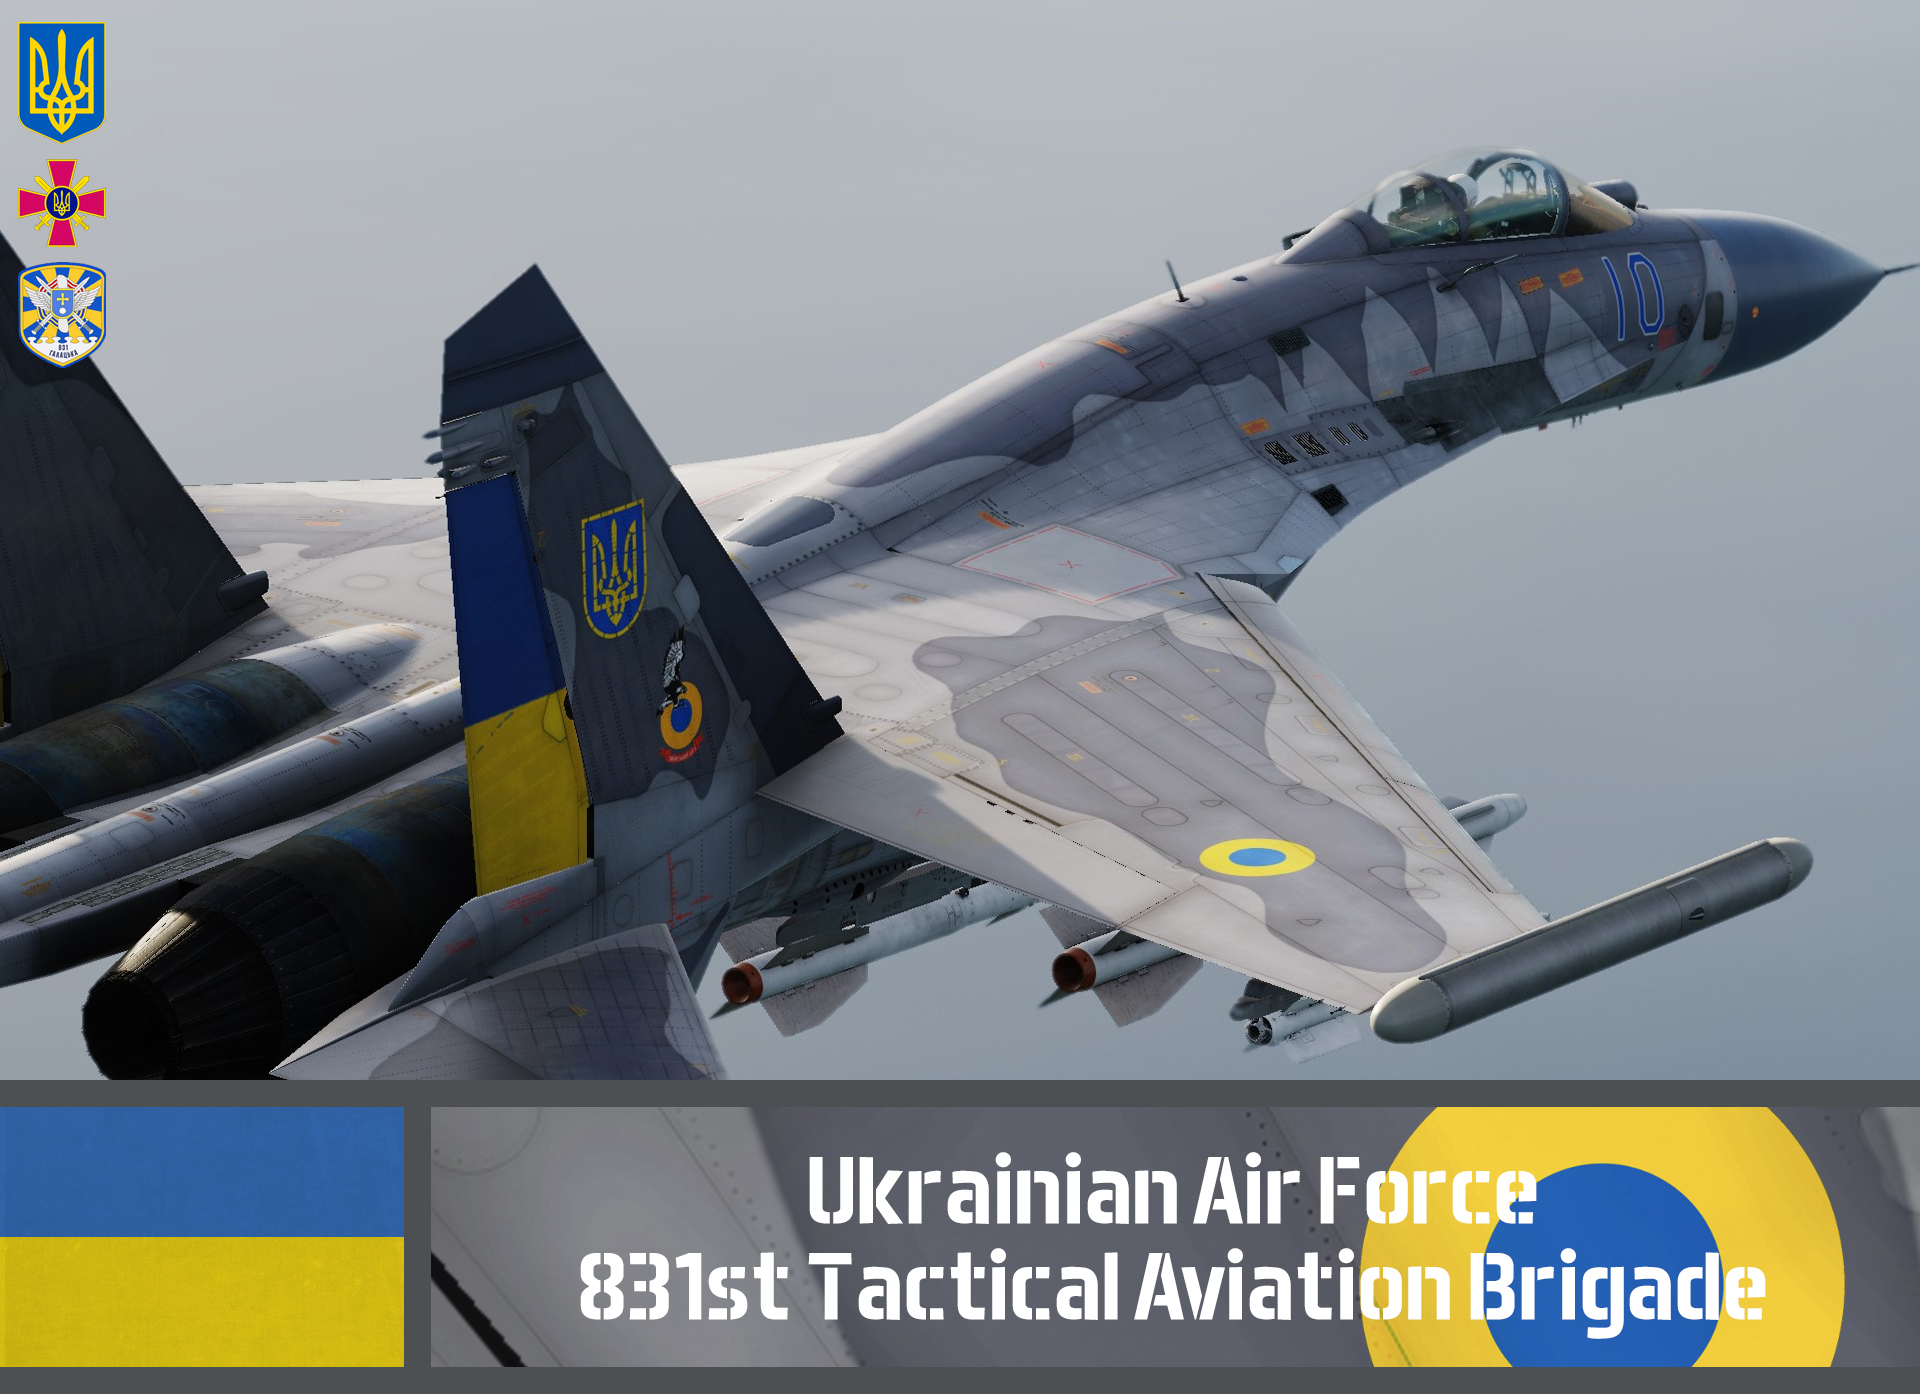 Su-27-1M - 831st Tactical Aviation Brigade, Low-Viz Grey | Ukraine (Realistic)